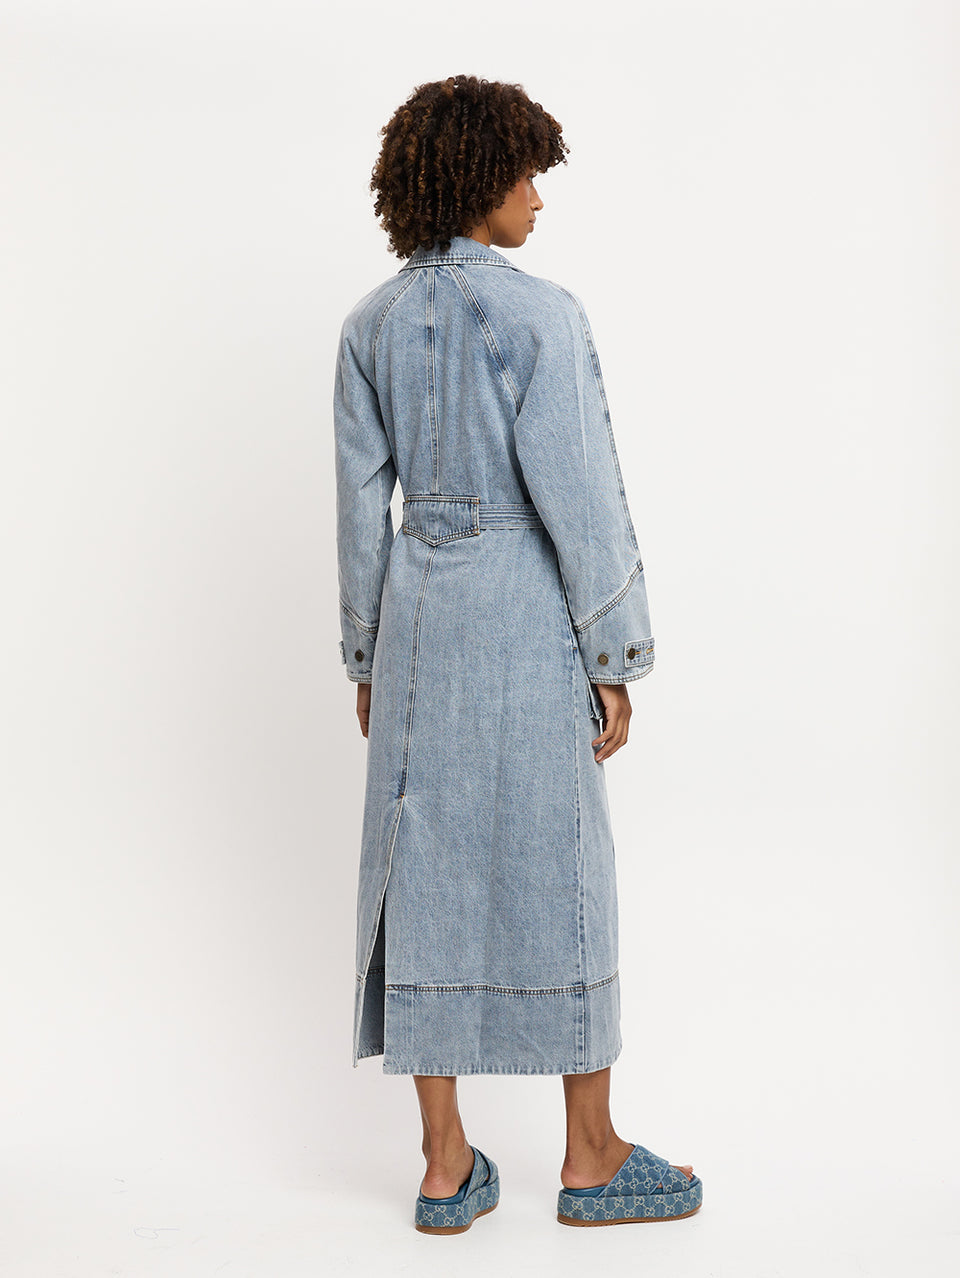 Olivia Denim Trench Coat KIVARI | Model wears light blue wash denim trench coat back view